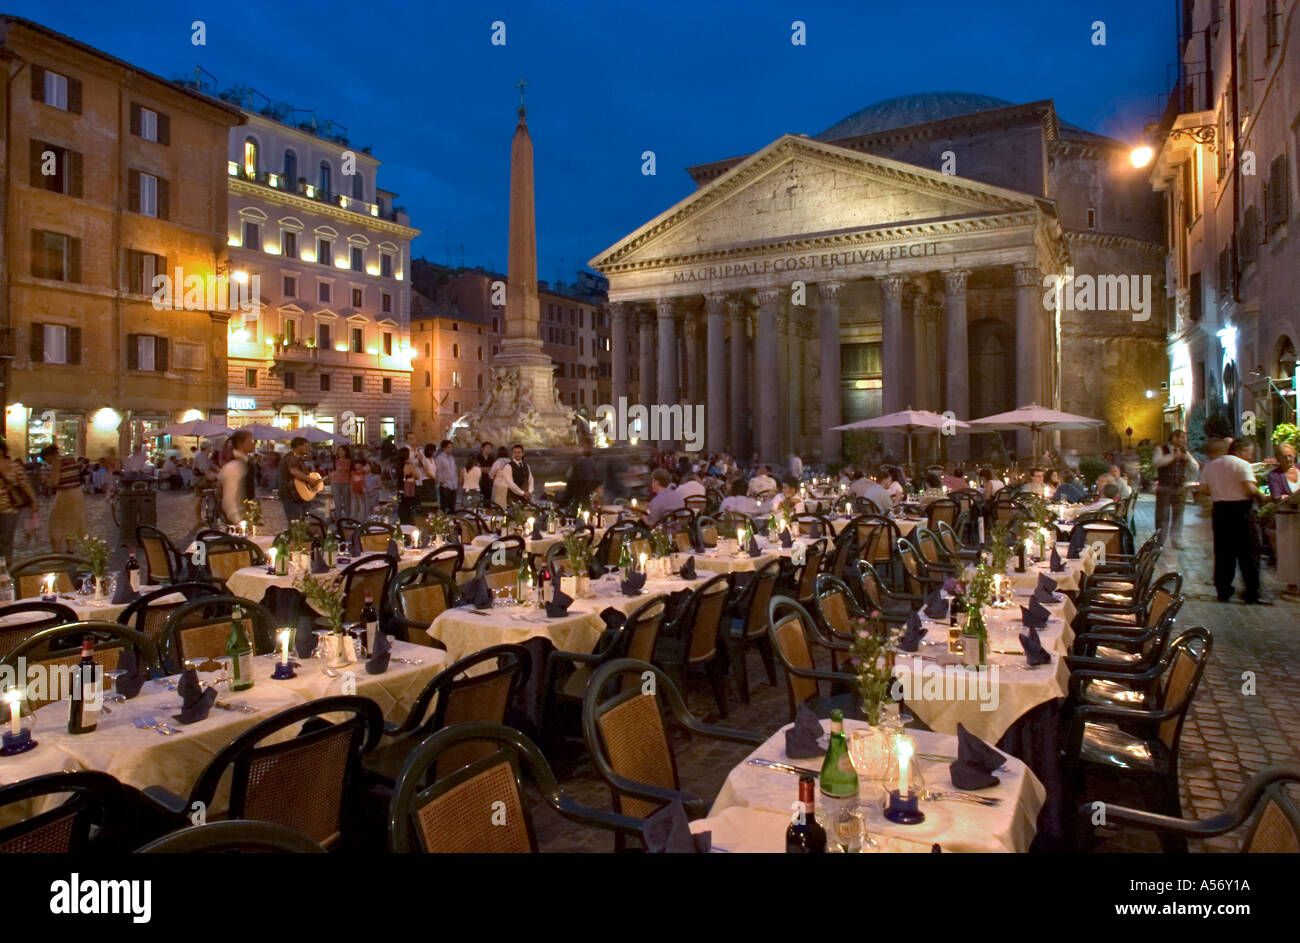 Pantheon und Restaurant am Abend, Piazza della Rotonda, Rom, Italien Stockfoto